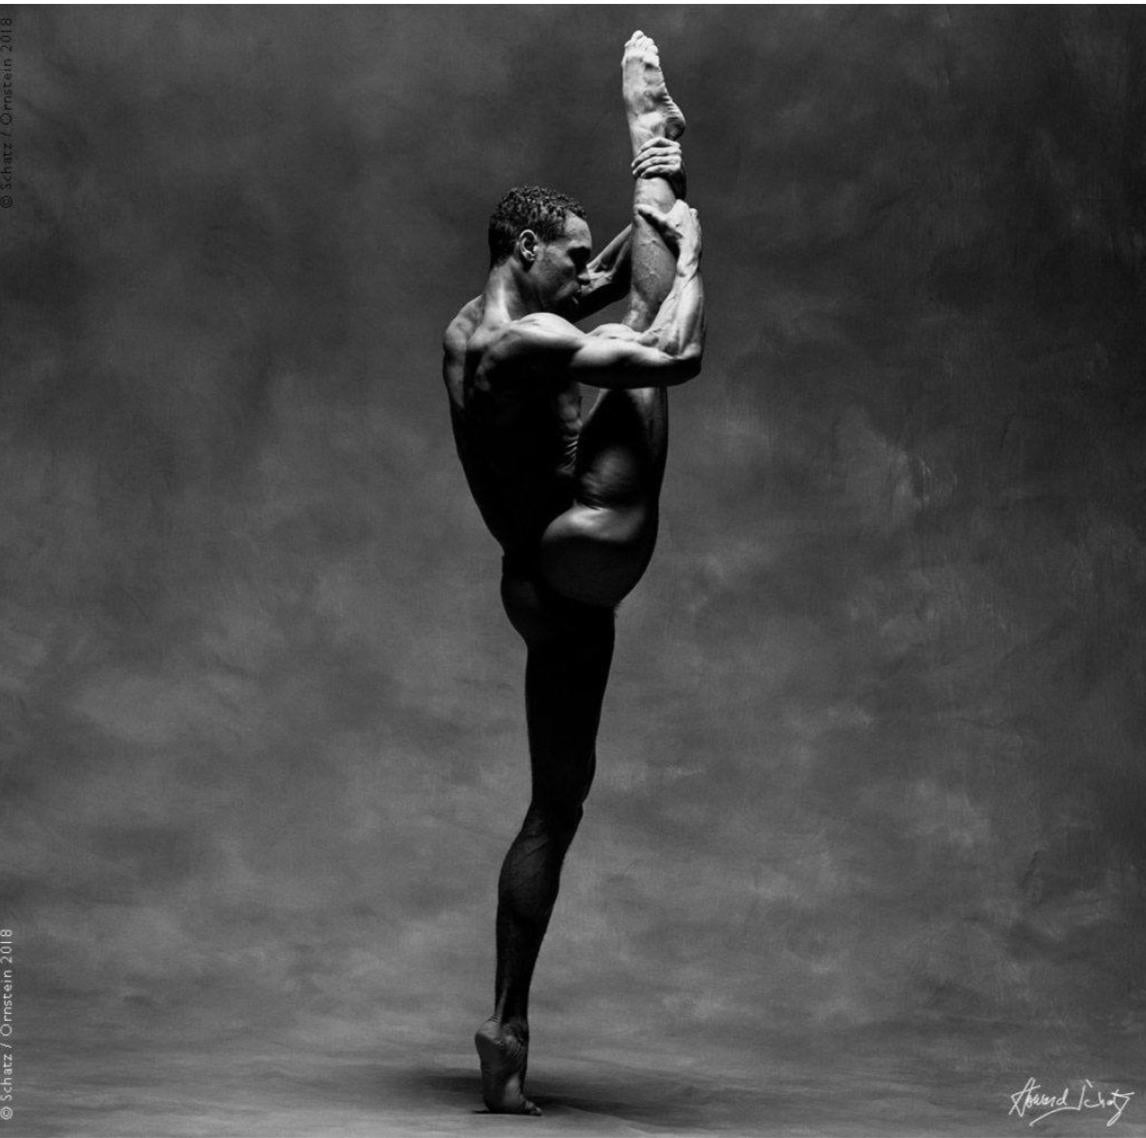 Howard Schatz Black and White Photograph - Dance Study 1213 (Alvin Ailey Dance Theatre, Richard Witter)